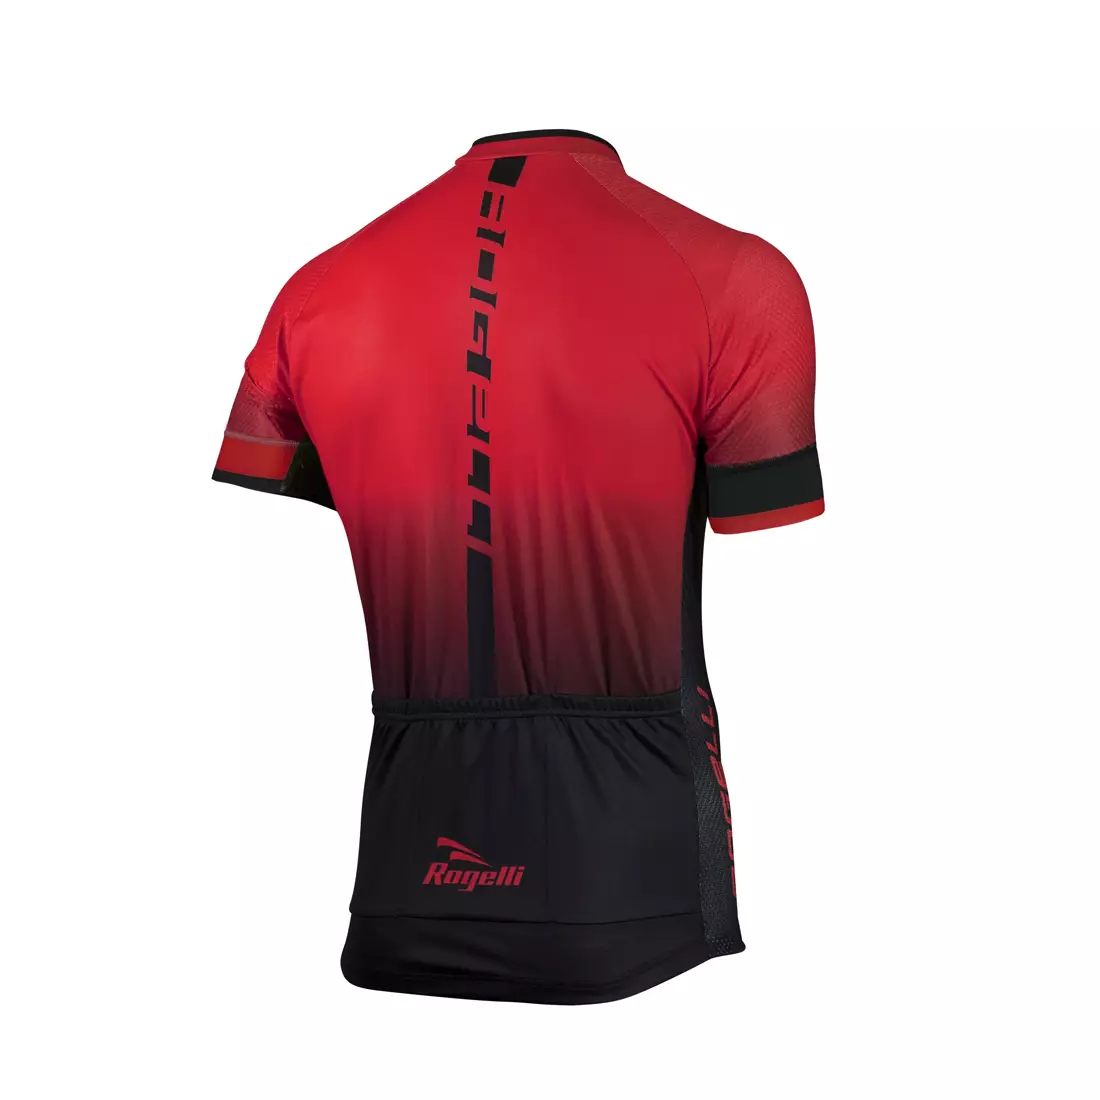 ROGELLI ISPIRATO tricou de ciclism, roșu și negru 001.401